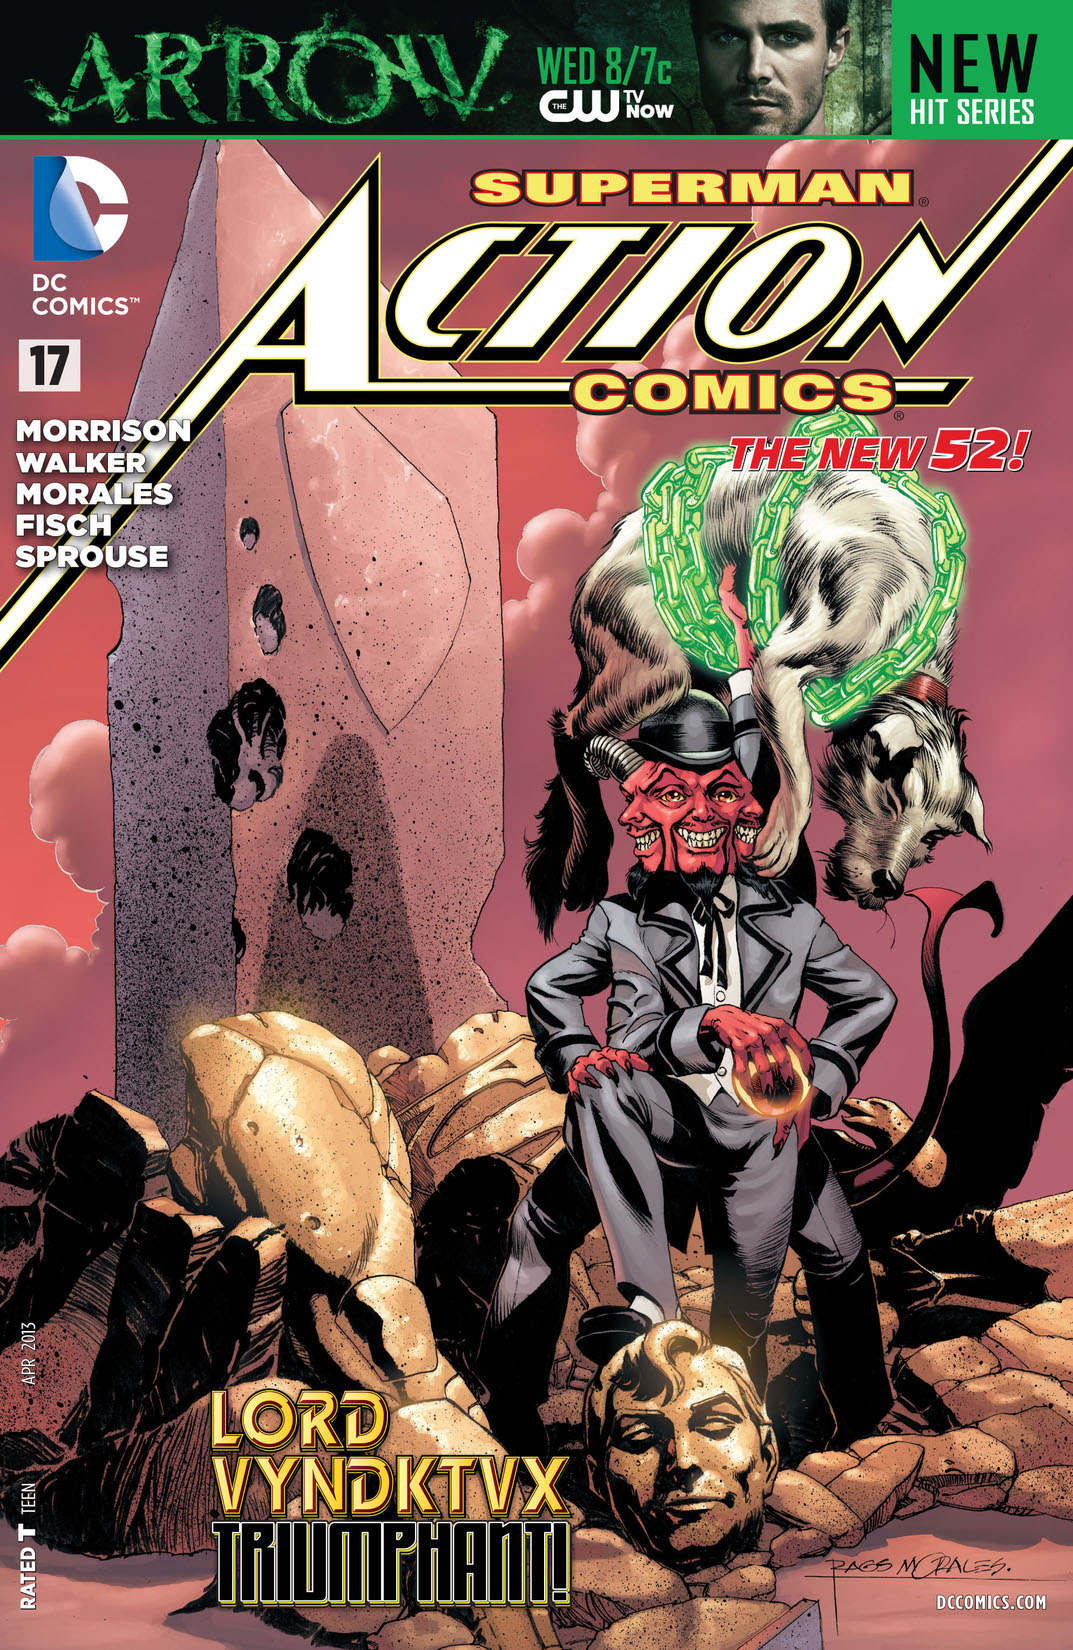 Action Comics (2011-) #17 preview images